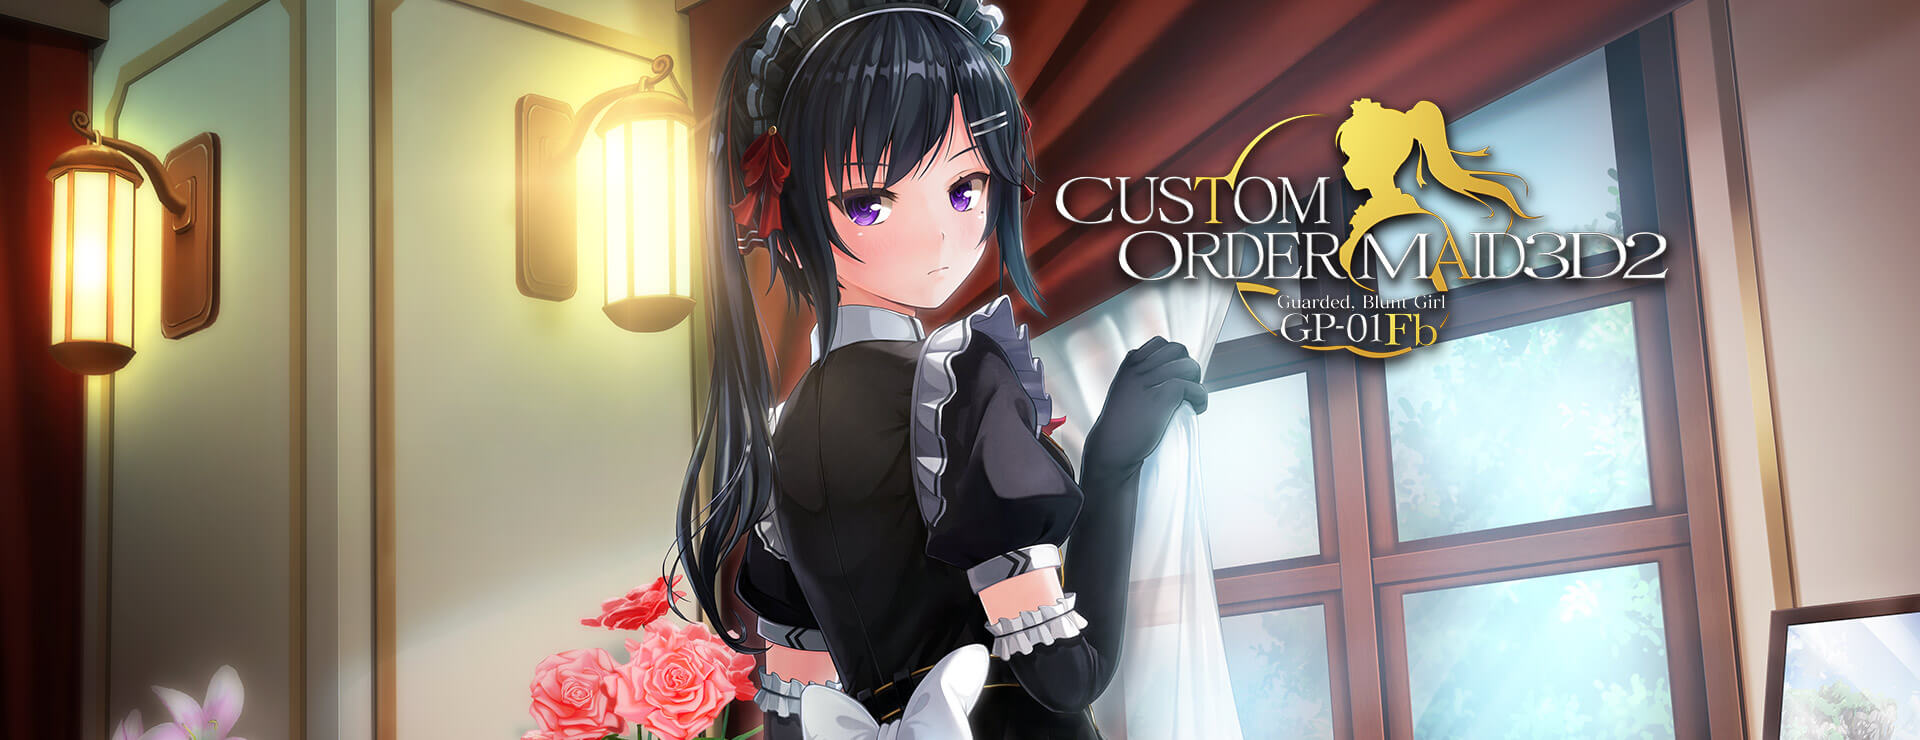 Custom Order Maid 3D2 Guarded, Blunt Girl GP-01fb DLC - シミュレーション ゲーム